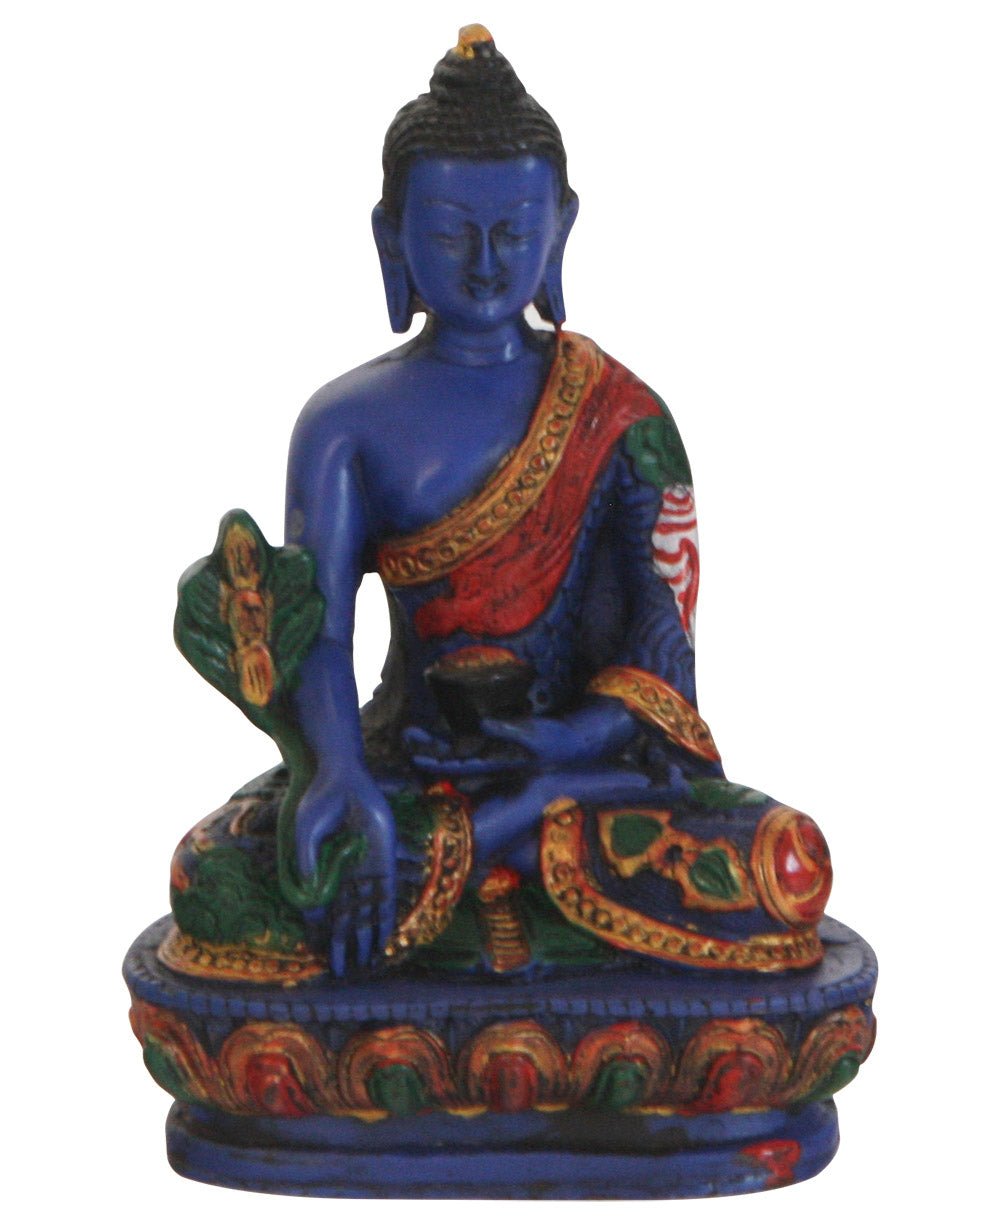 Multicolored Blue Medicine Buddha Statue, 5.5 Inches - Sculptures & Statues